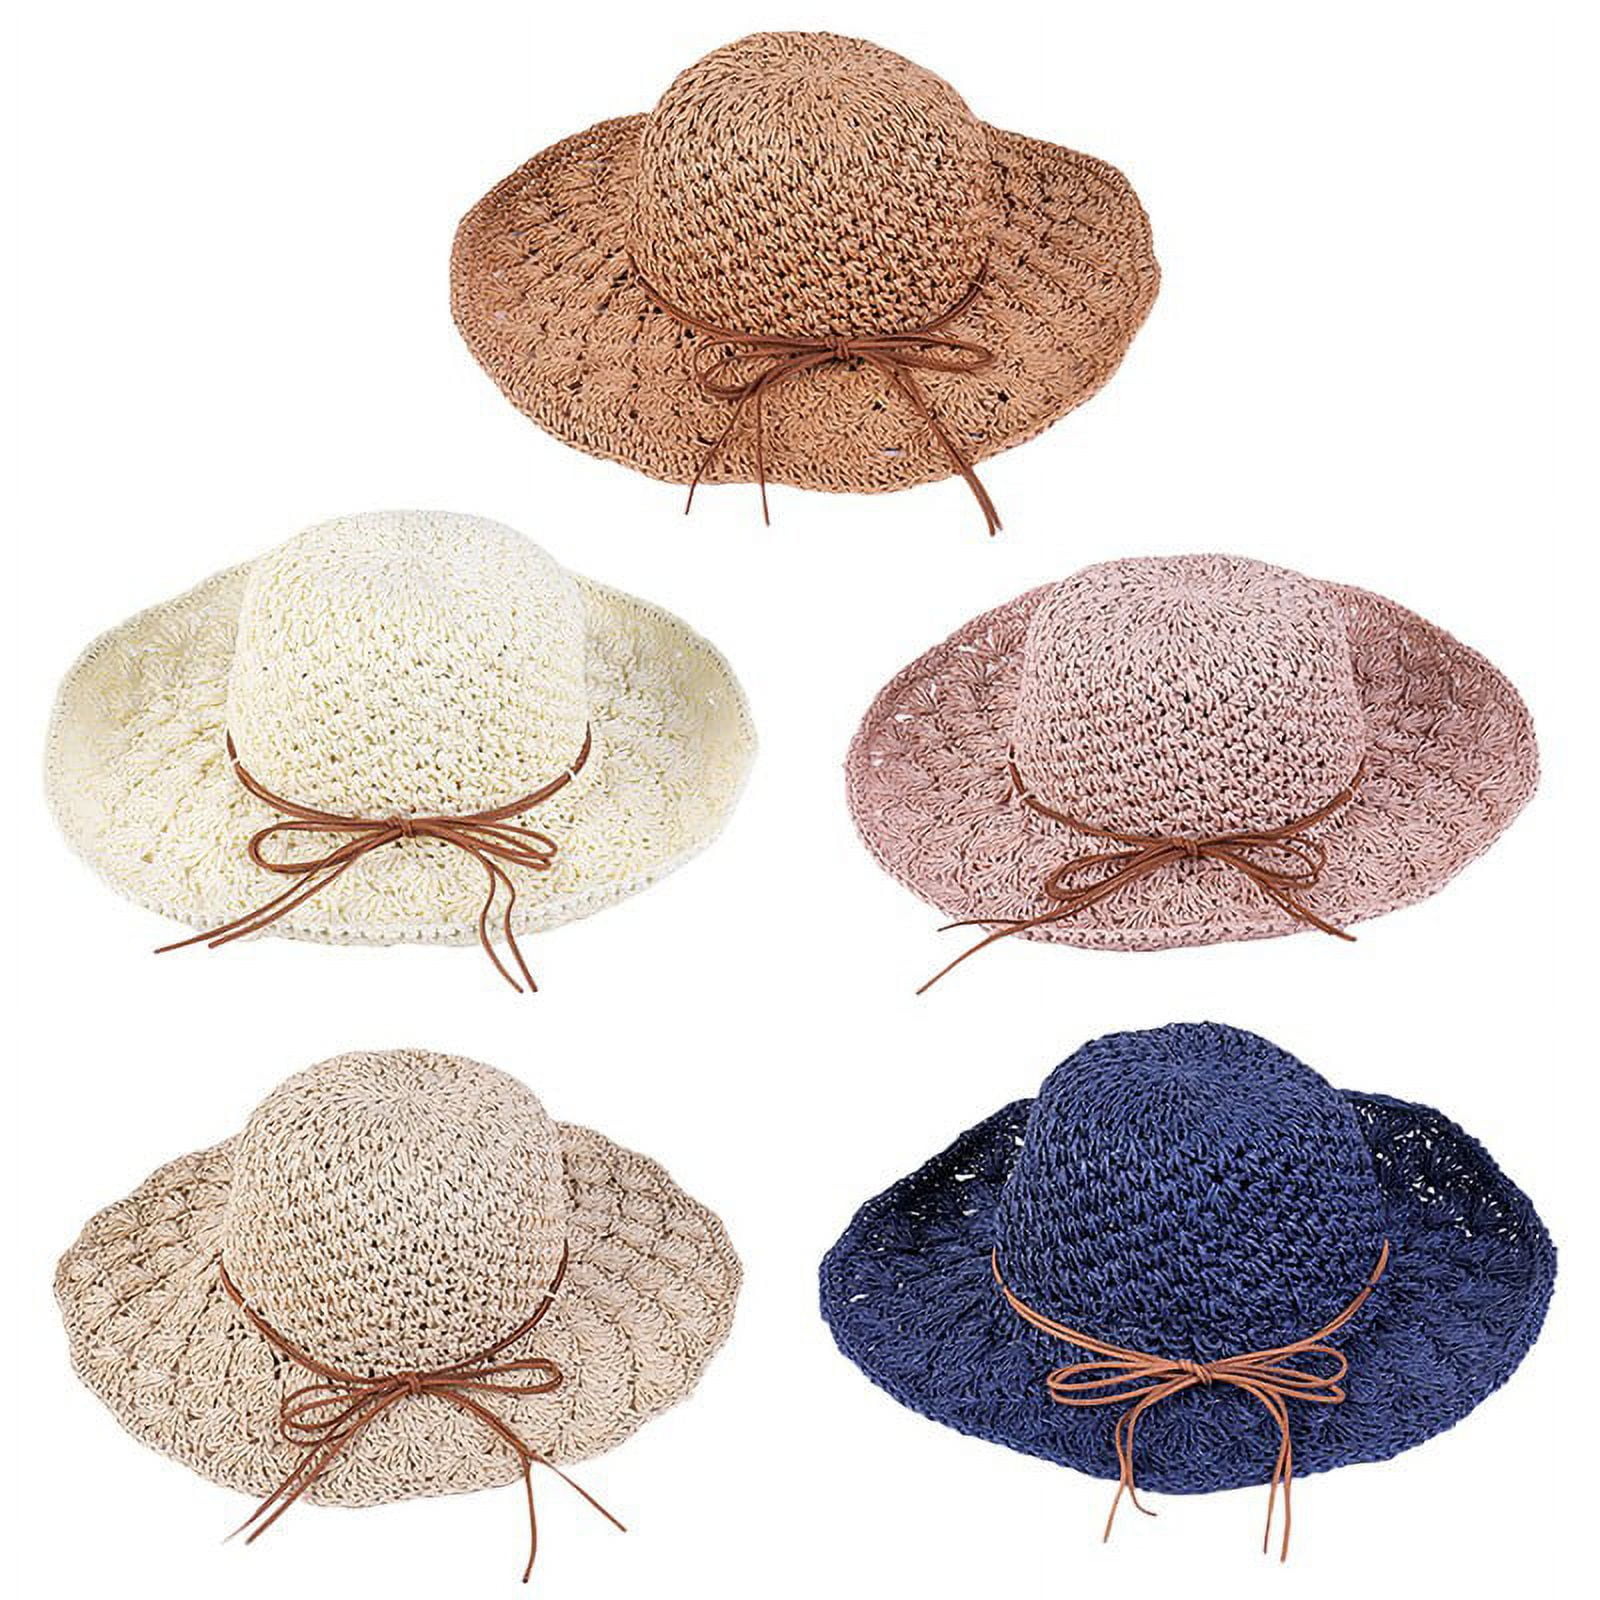 Women's Wide Brim Sun Protection Straw Hat,Summer Protection Beach Cap and  Sunflower Headpiece.(LDZ55)